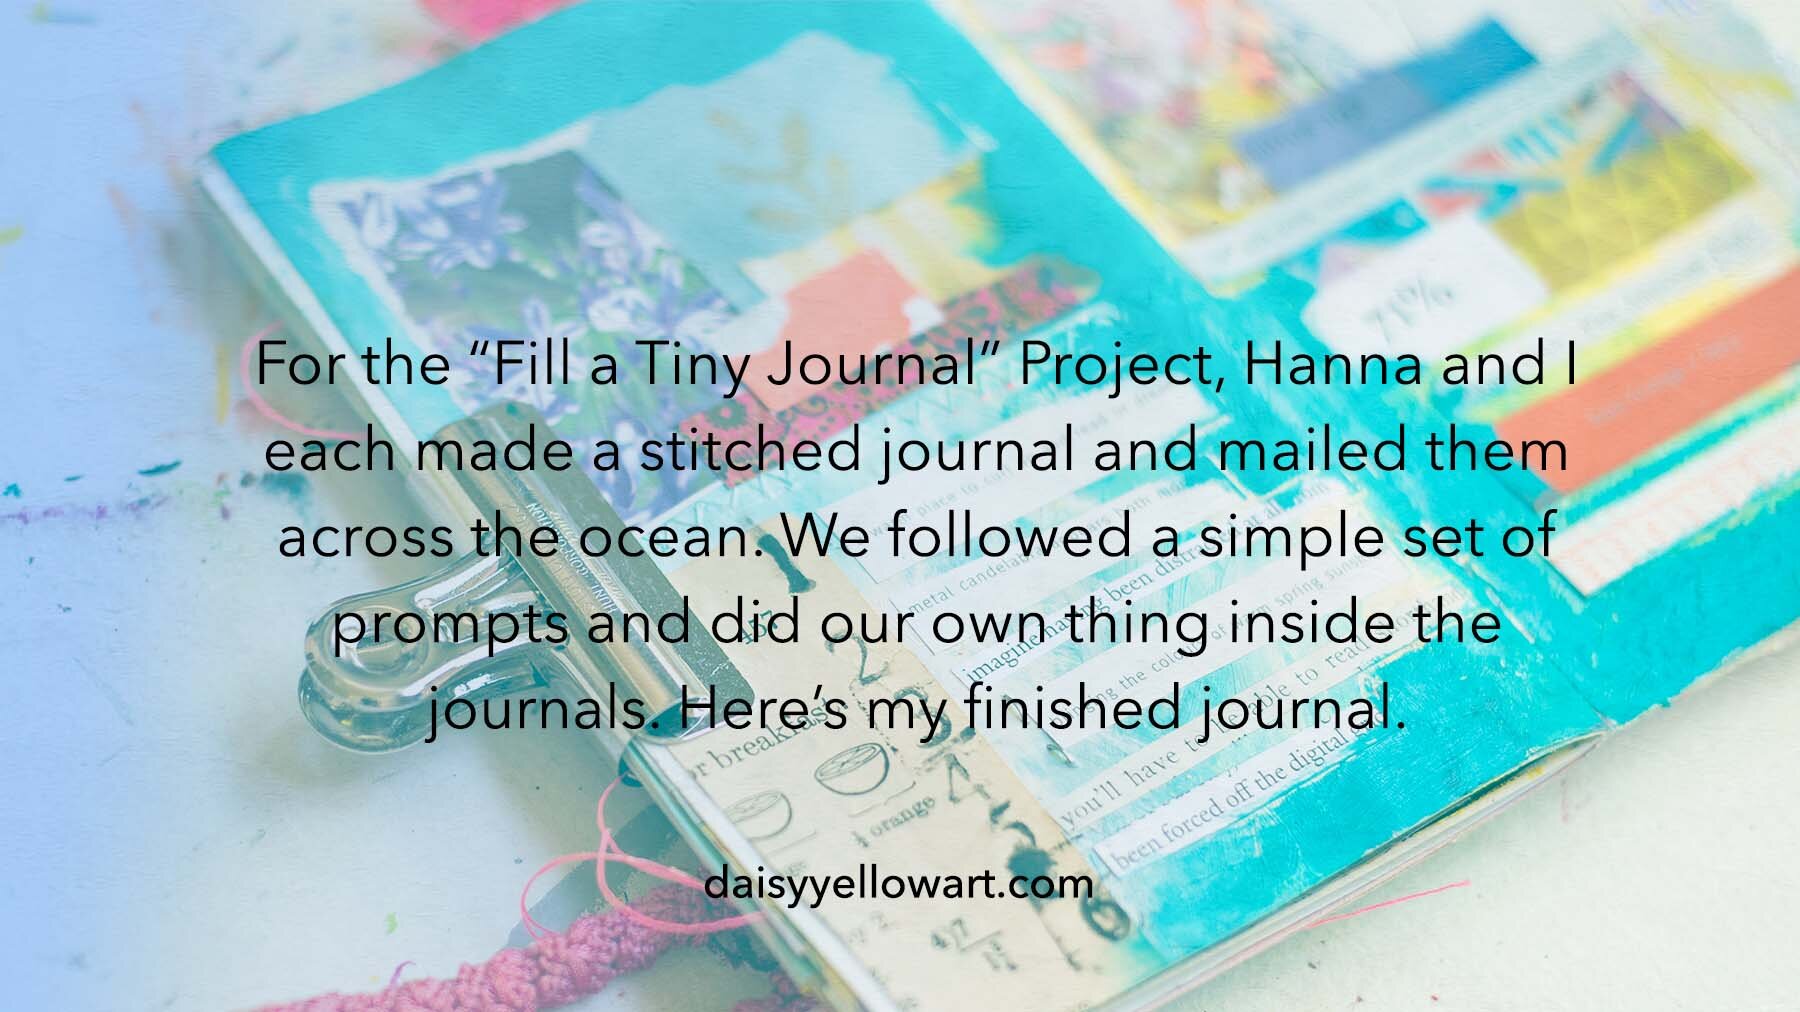 Adventure Journaling Review and Creative Journal Flip Through